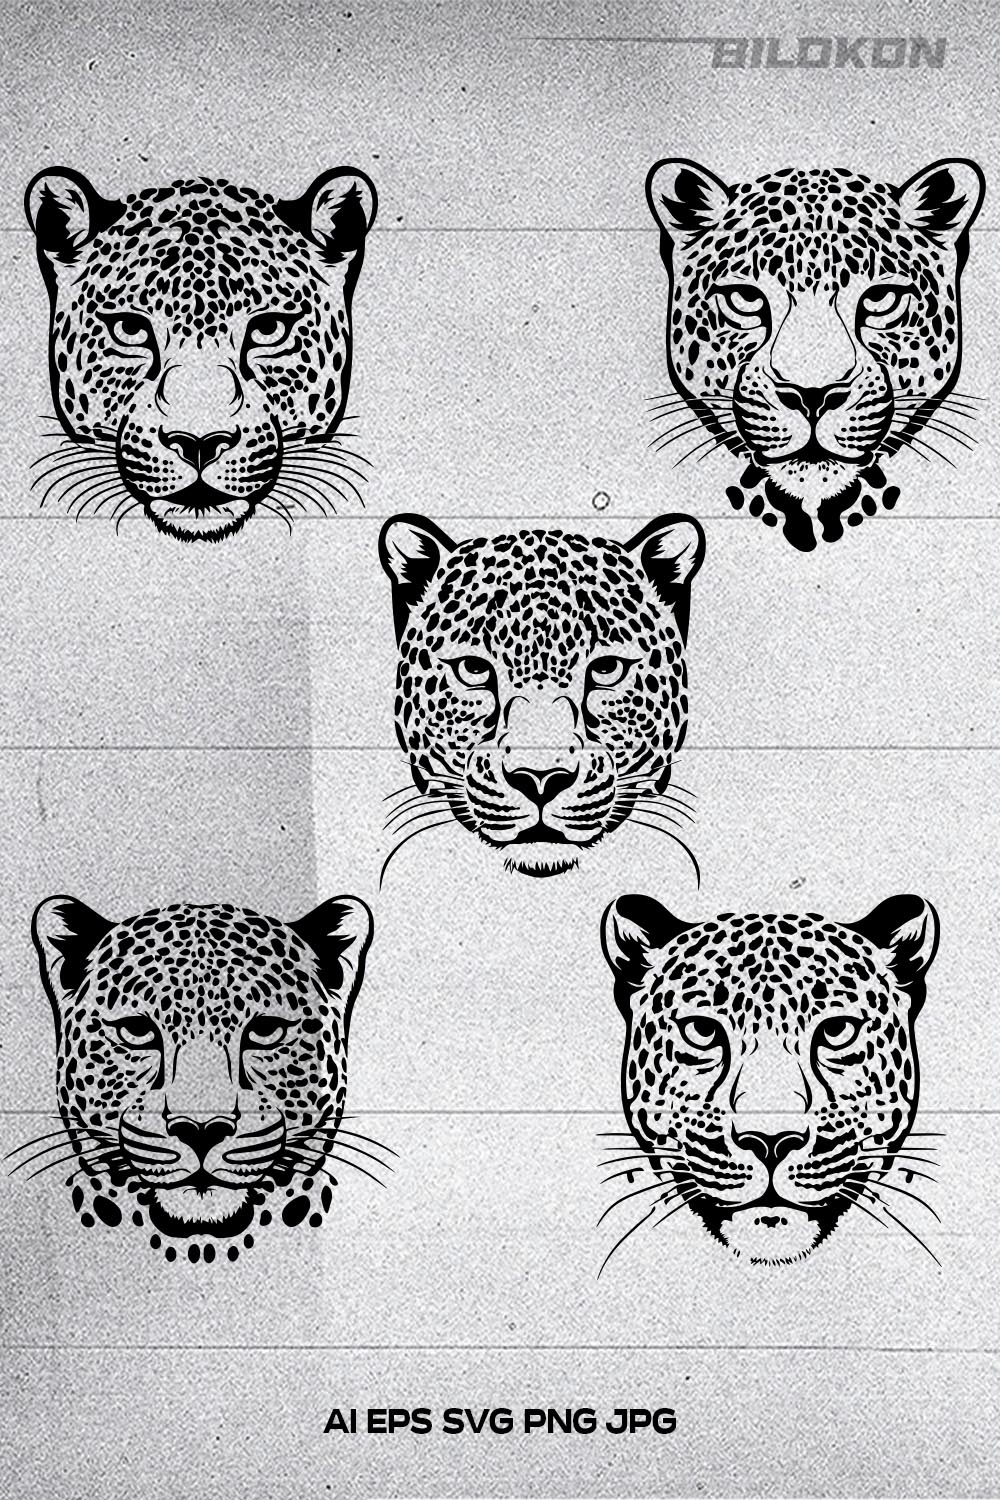 Leopard head Vector Illustration, leopard face, , SVG pinterest preview image.